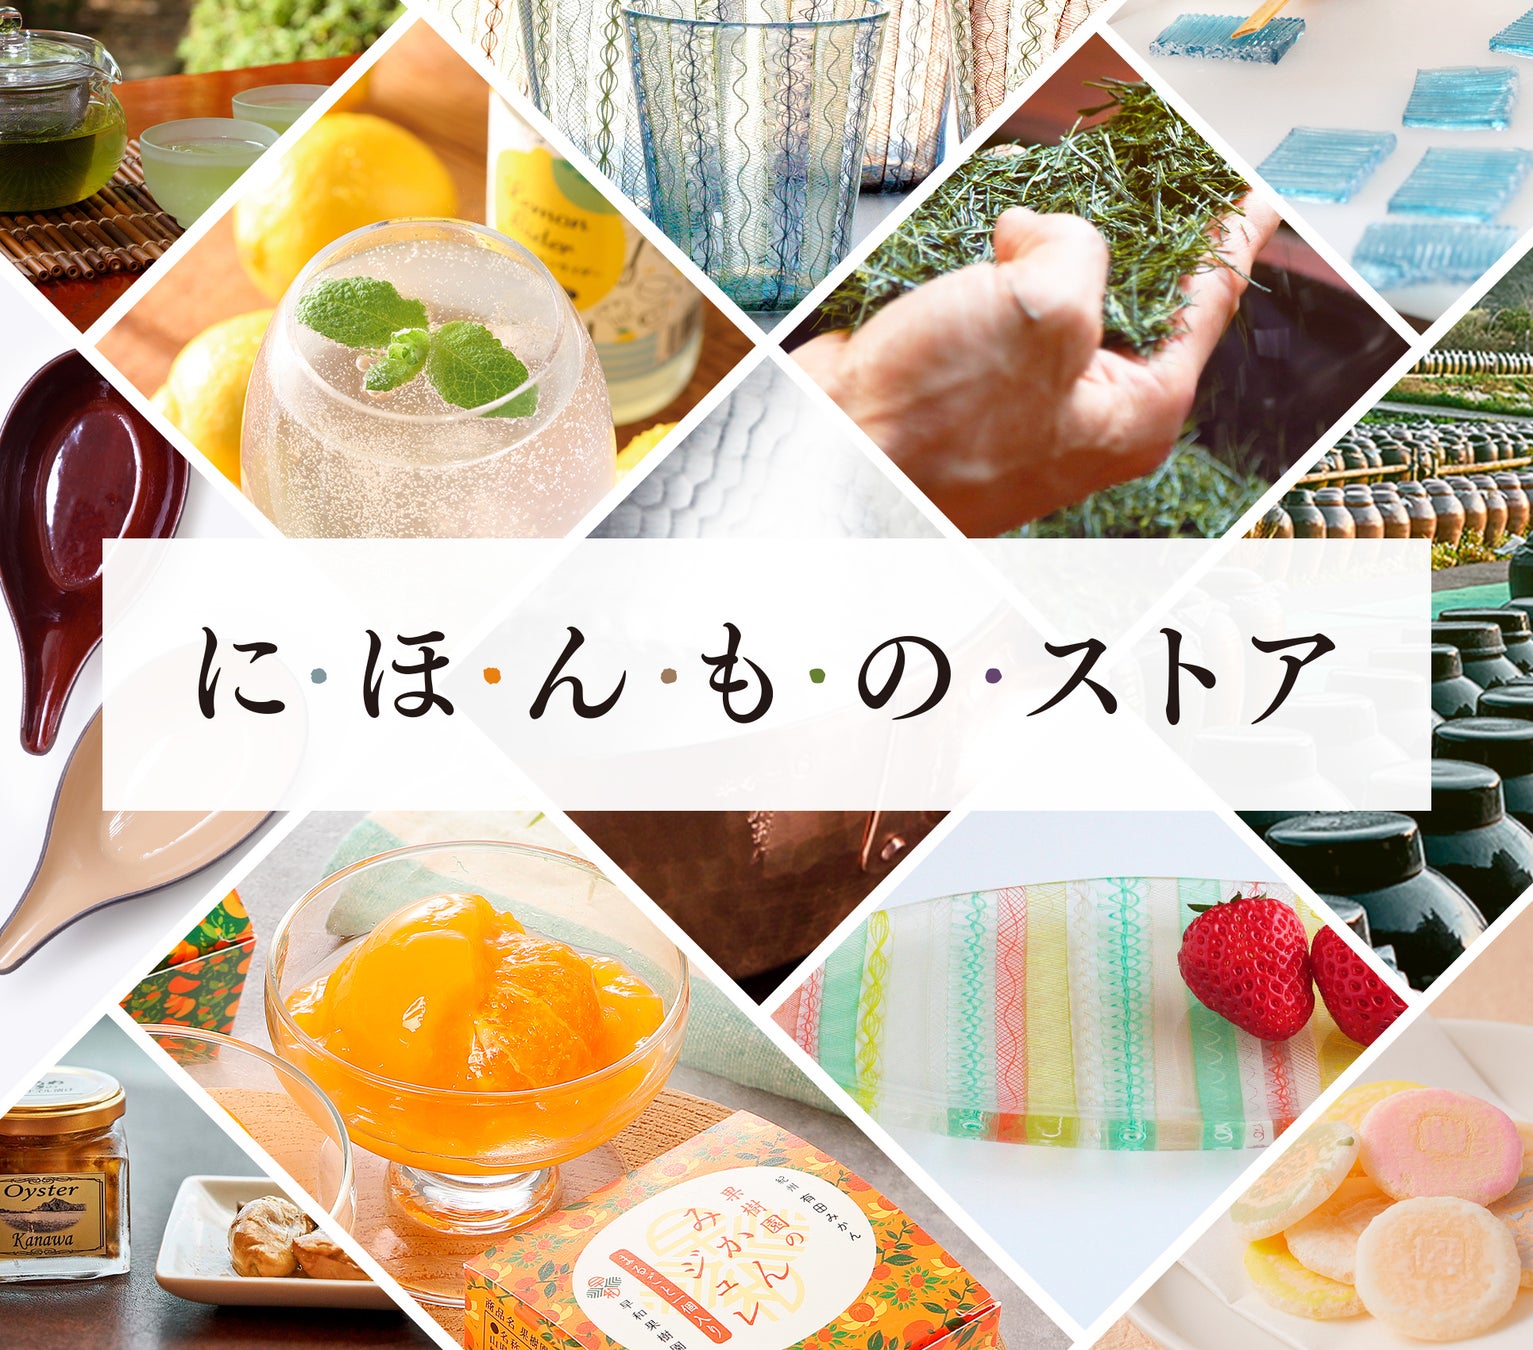 MONGOL800、森山直太朗、TOSHI-LOW（BRAHMAN／OAU）が追加発表！ 中田英寿が総合プロデュースする日本酒イベントも、音楽・マーケット・食が楽しめるフェスが9月に開催のサブ画像6